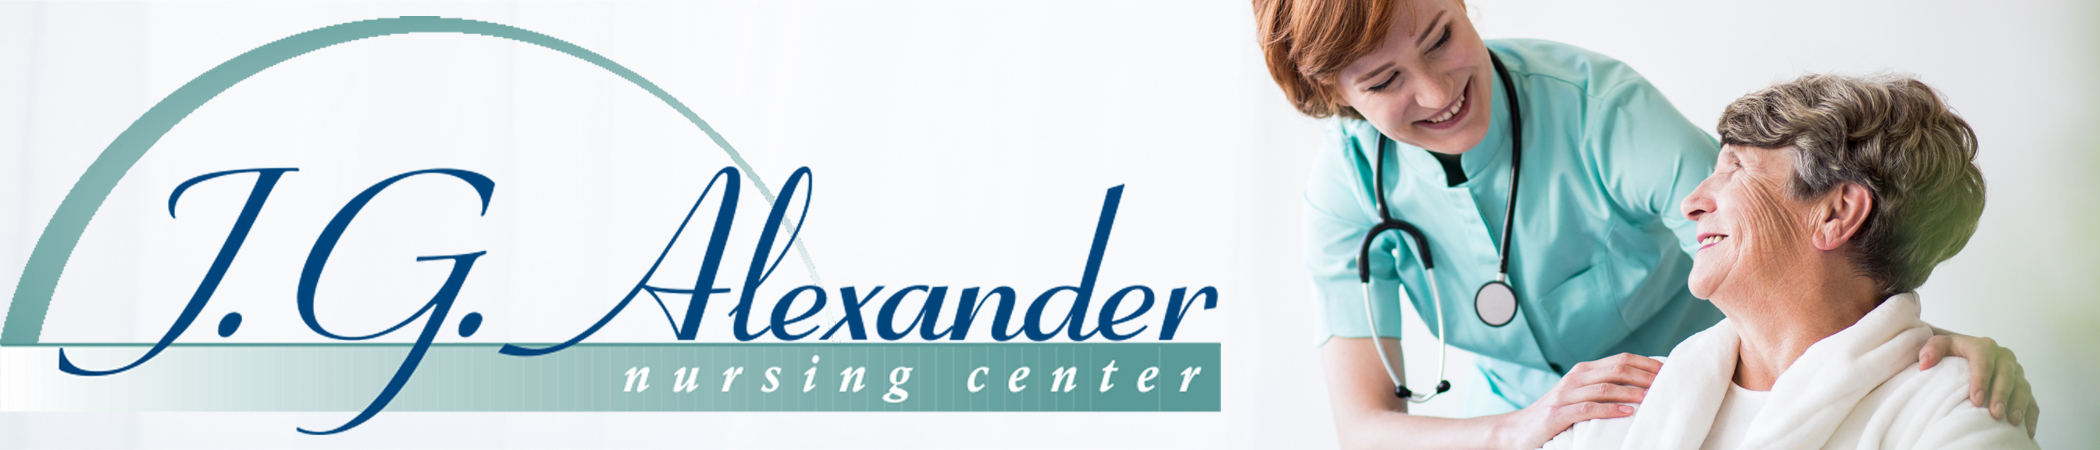 J.G. Alexander Nursing Center